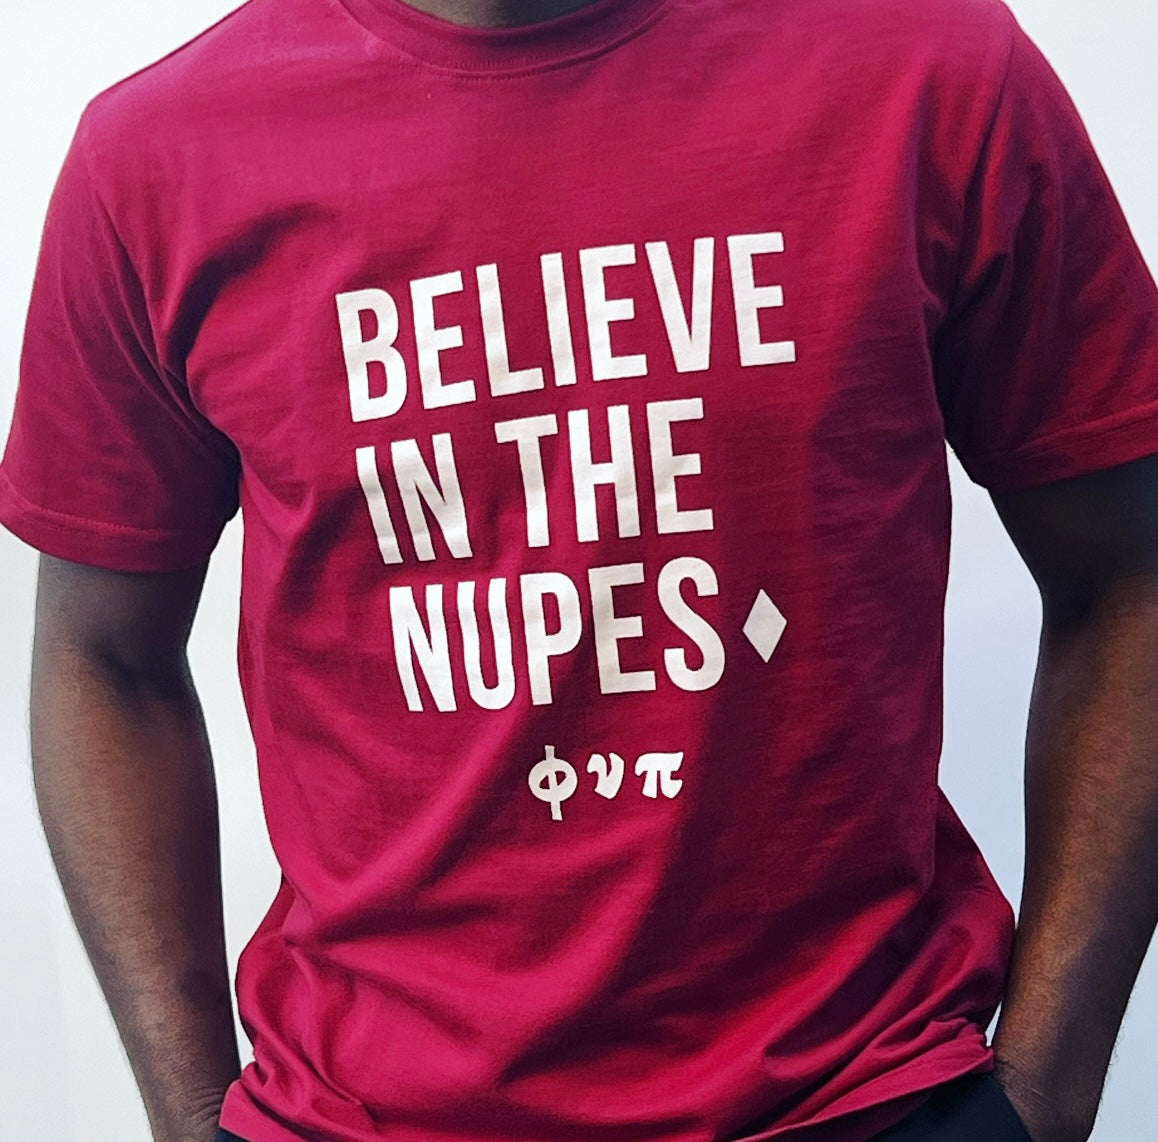 Kappa Alpha Psi Graphic T Shirt